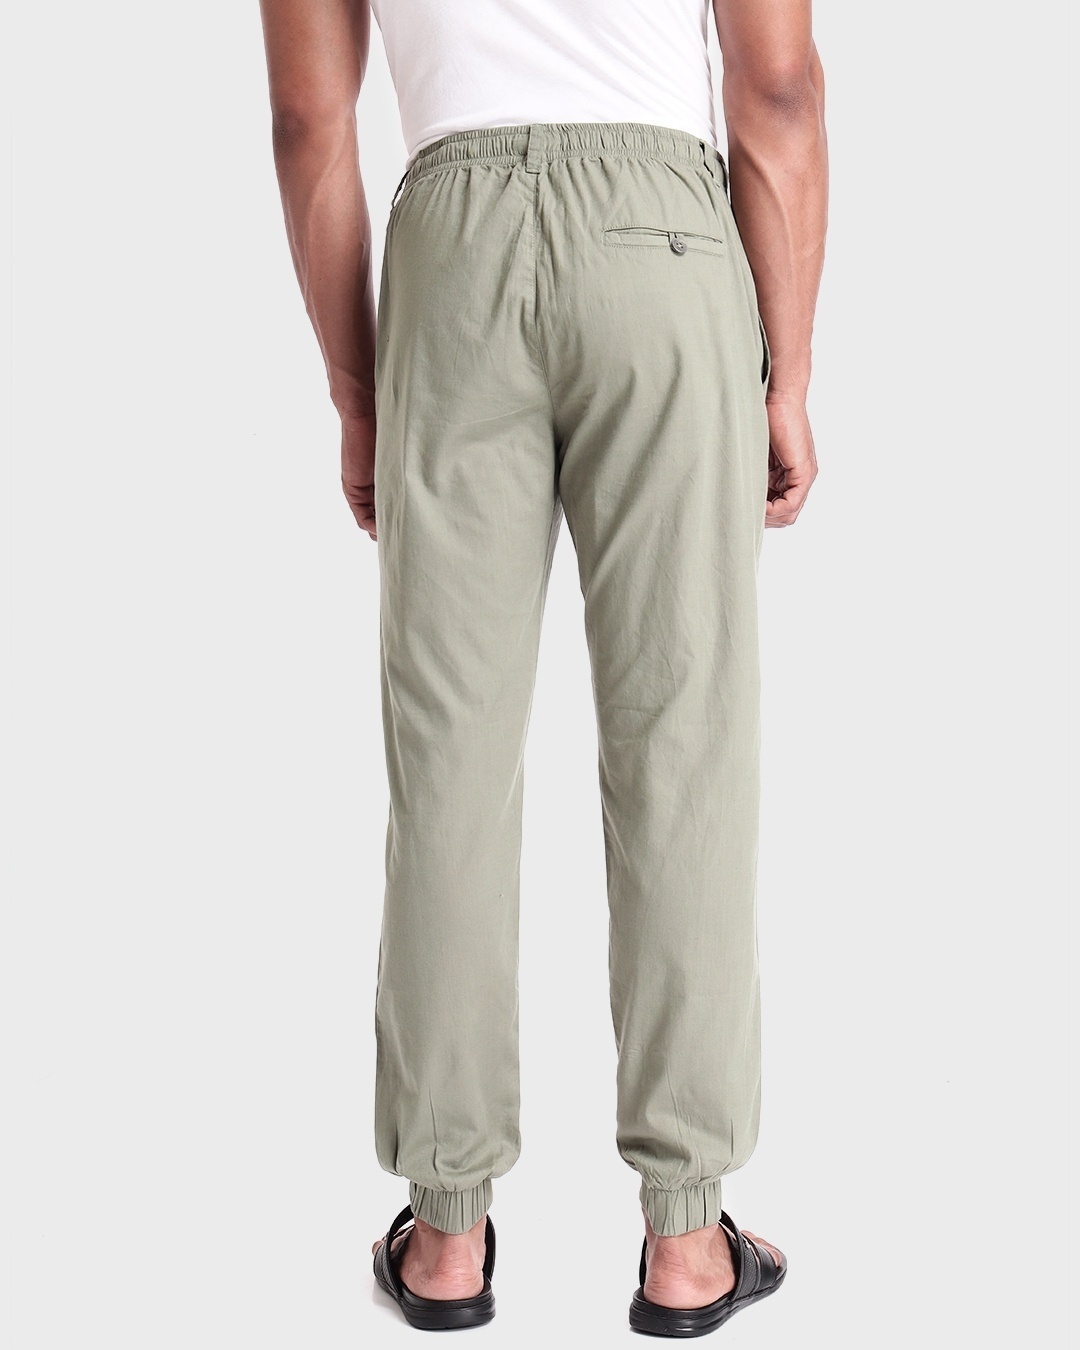 Buy Sage Green Cotton Jogger Pants for Men green Online at Bewakoof